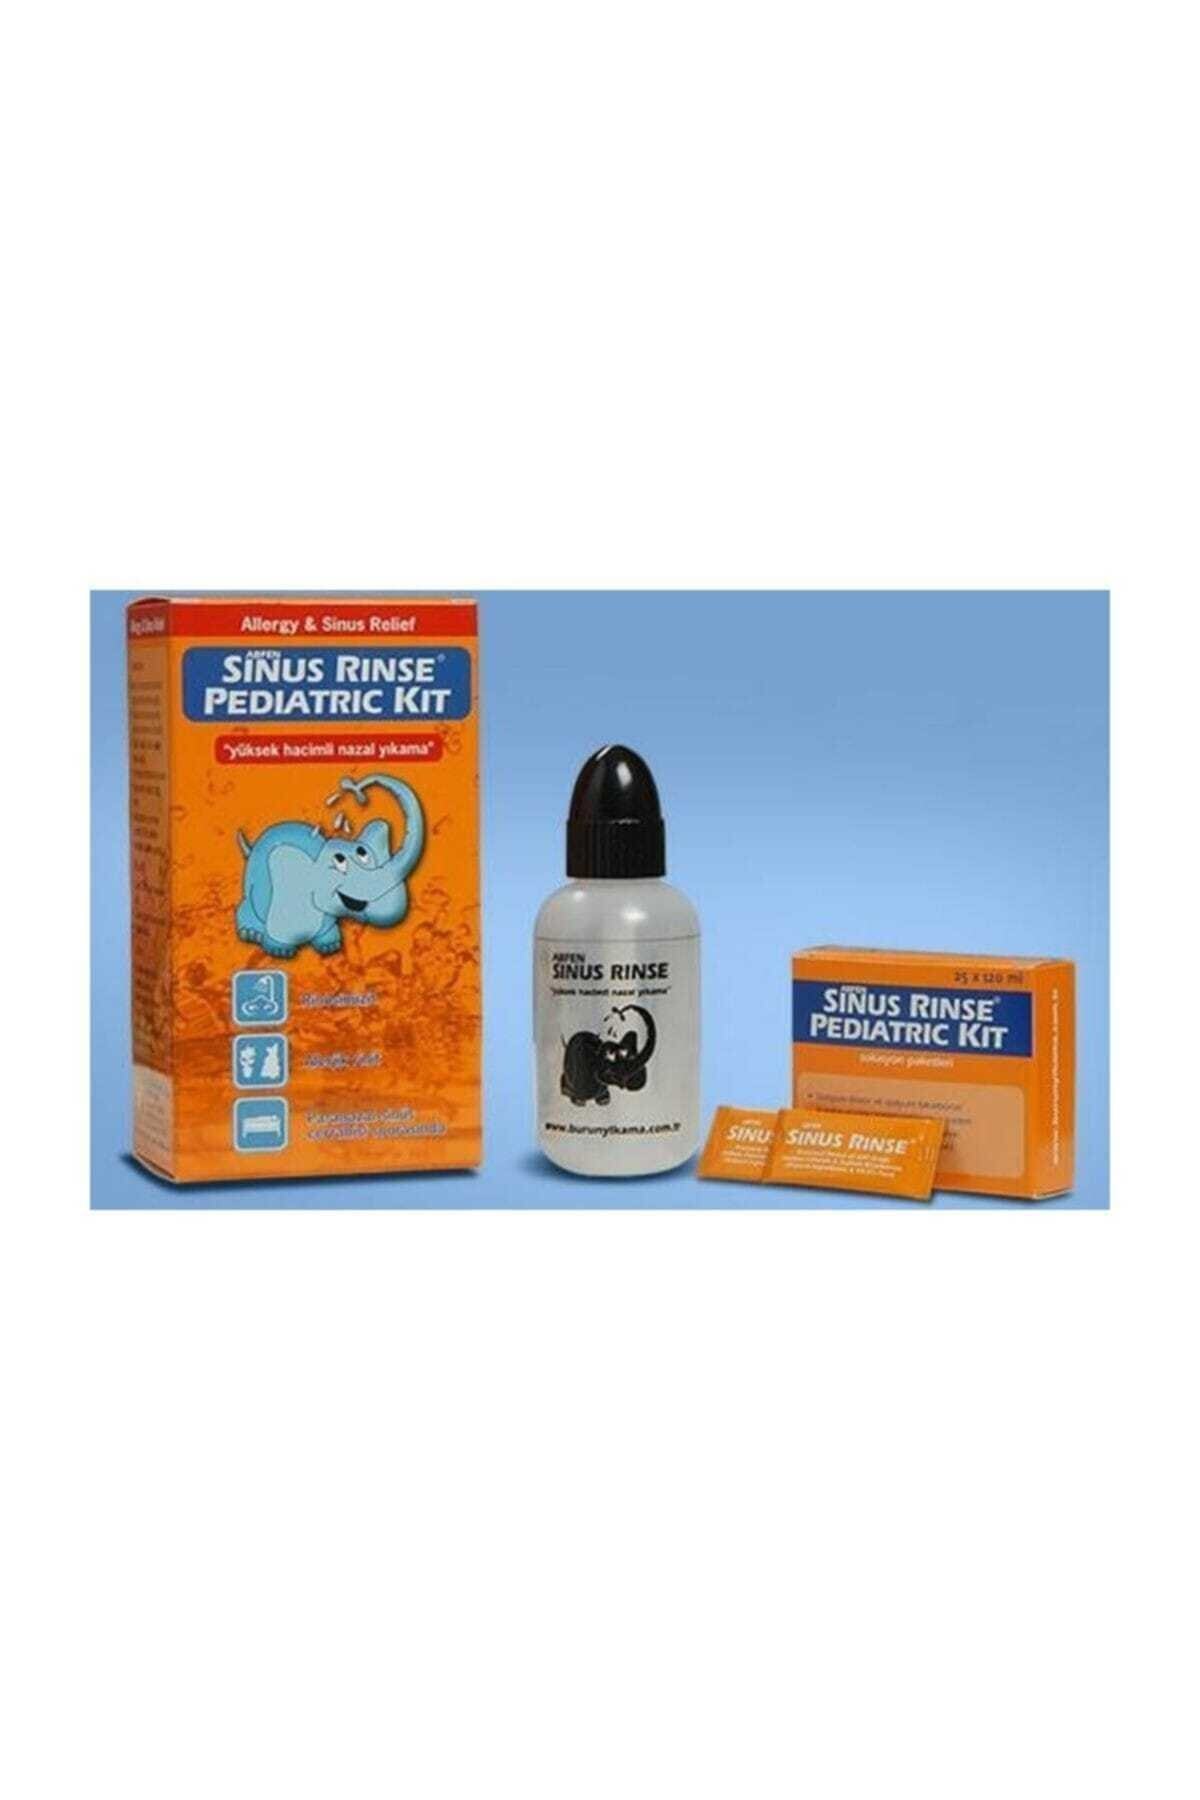 Abfen Farma Sinus Rinse Pediatric Kit QR6959